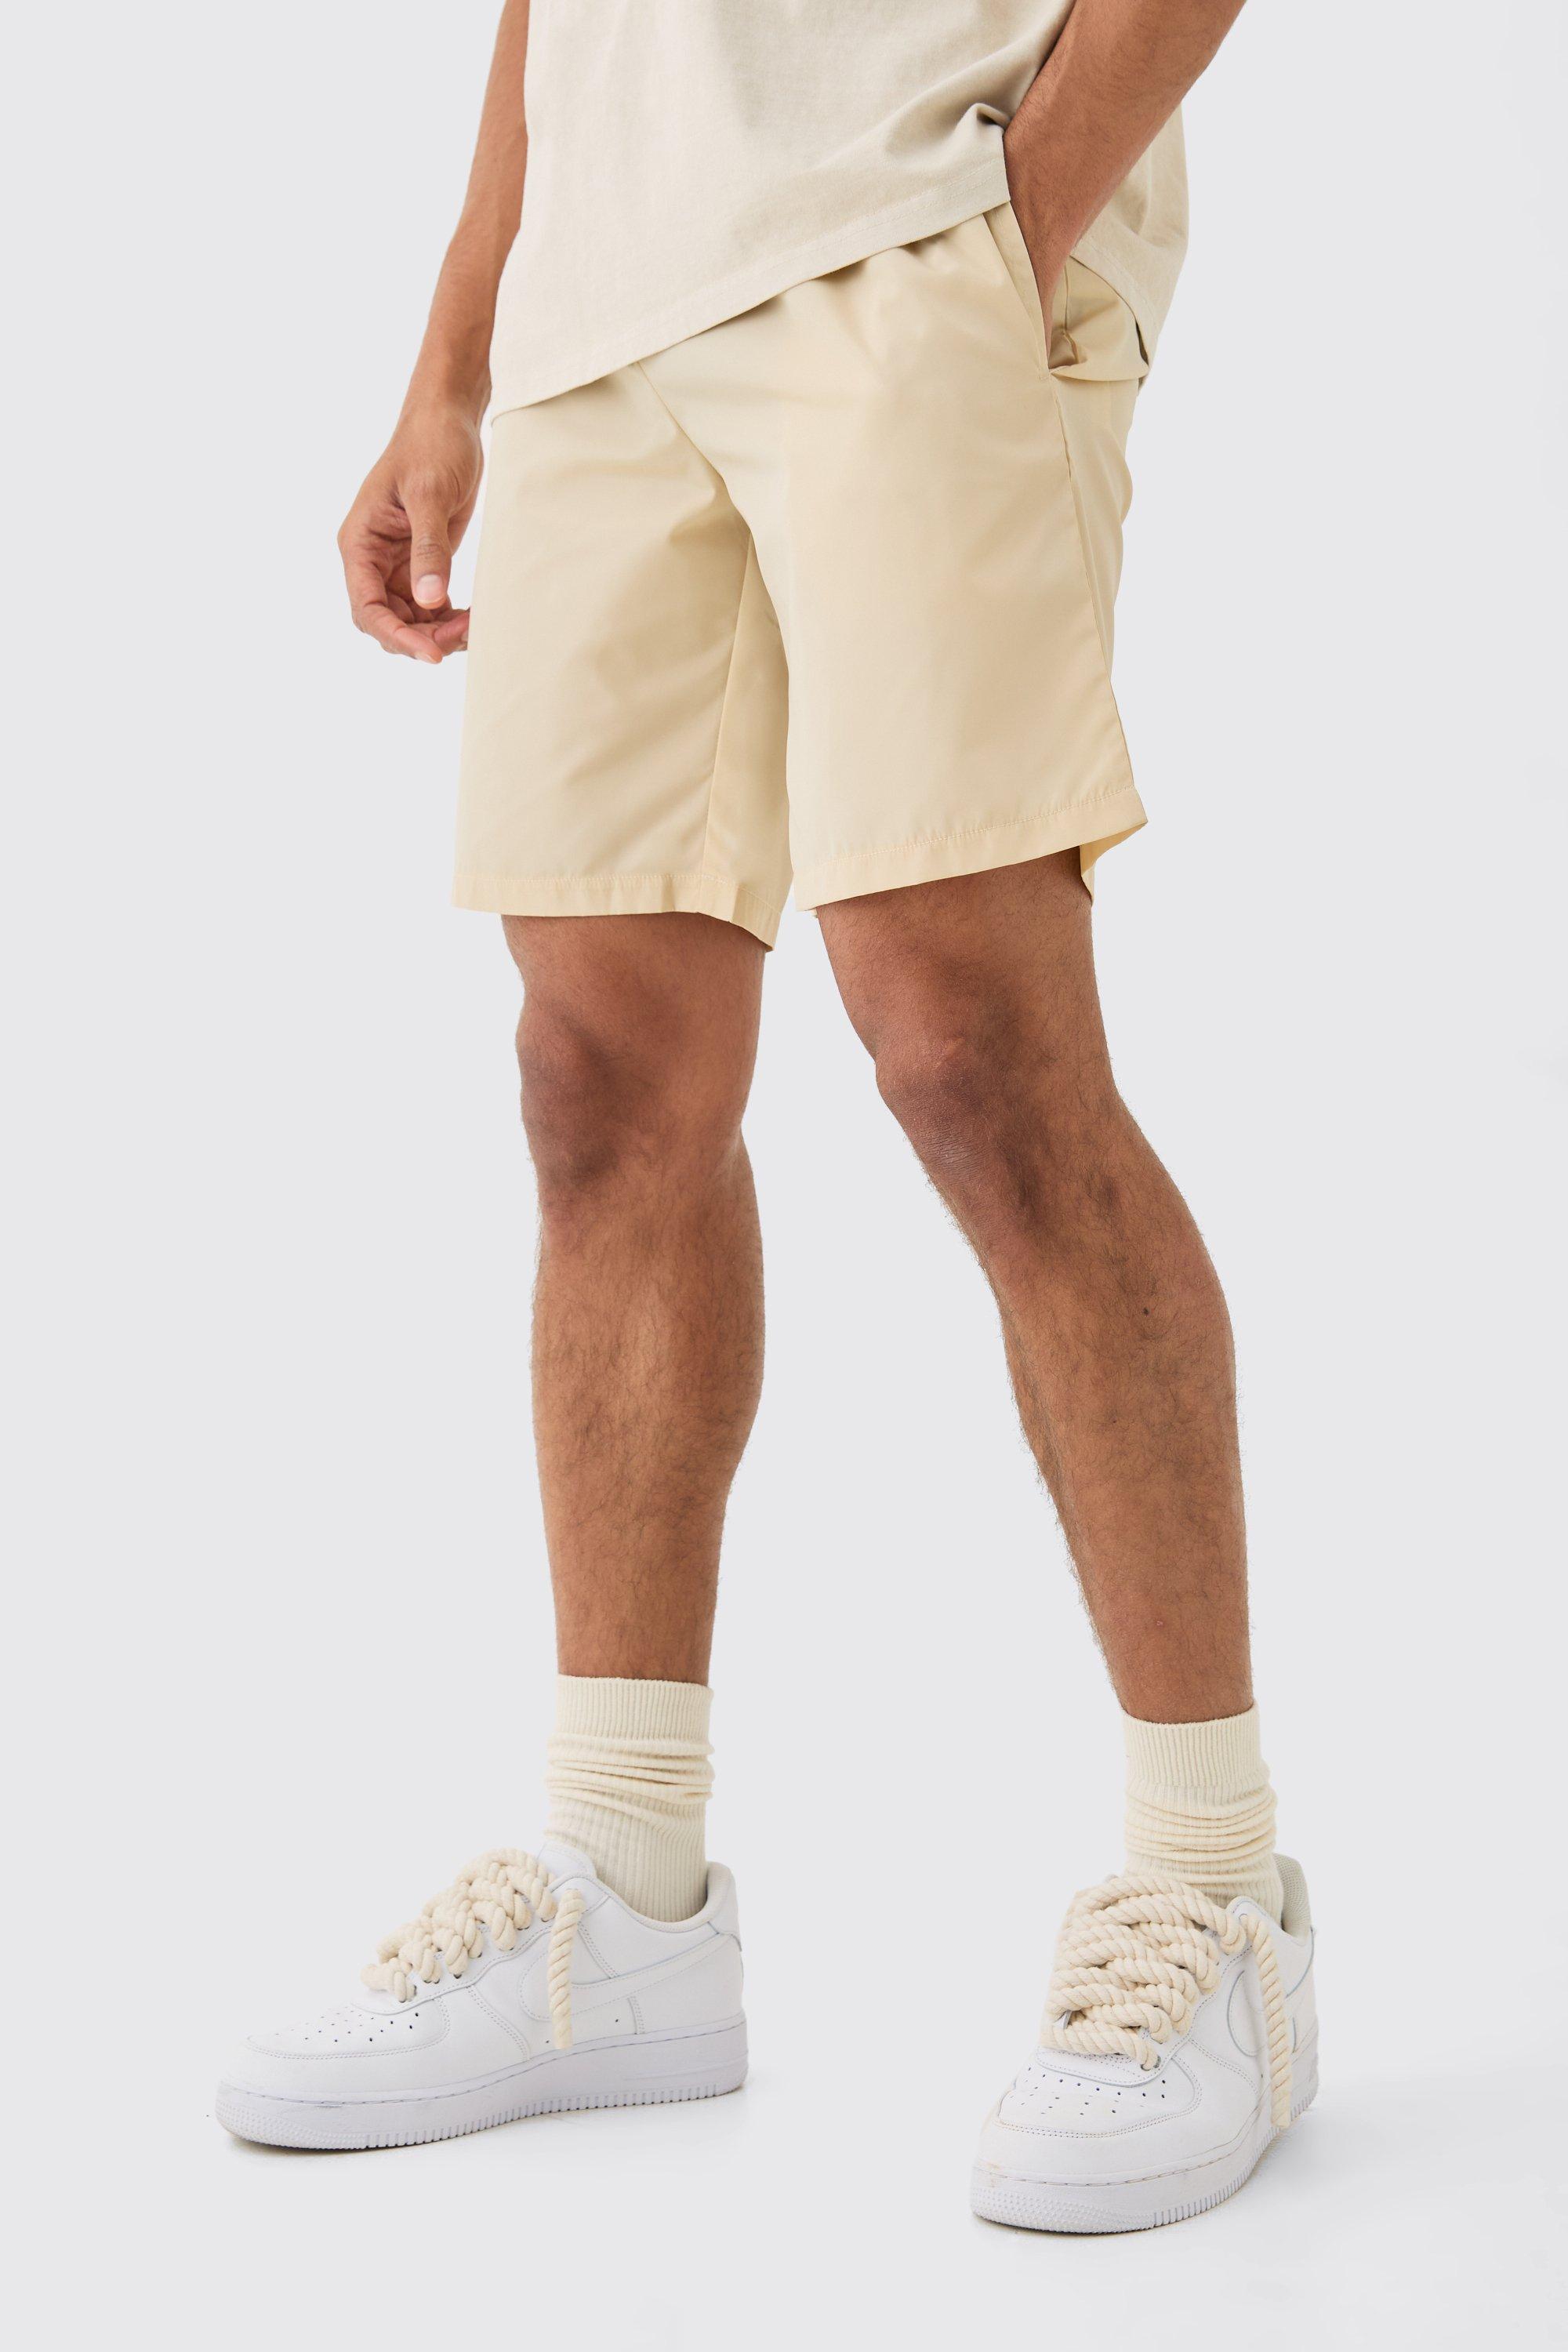 Image of Elastic Waist Comfort Nylon Shorts, Cream